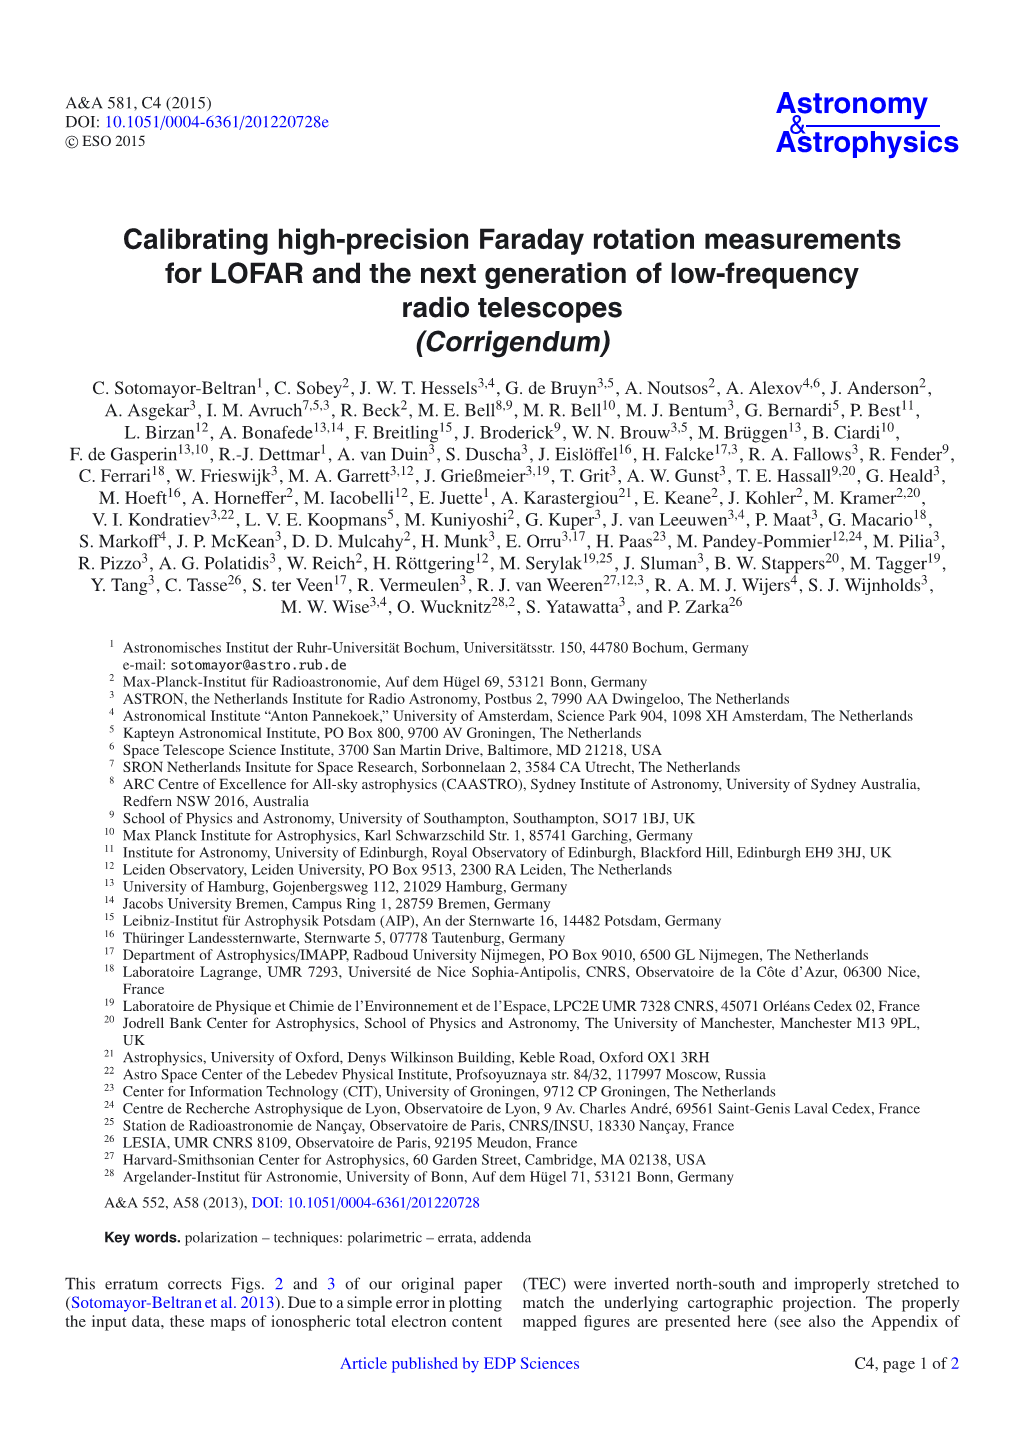 Calibrating High-Precision Faraday Rotation Measurements for LOFAR and the Next Generation of Low-Frequency Radio Telescopes (Corrigendum)